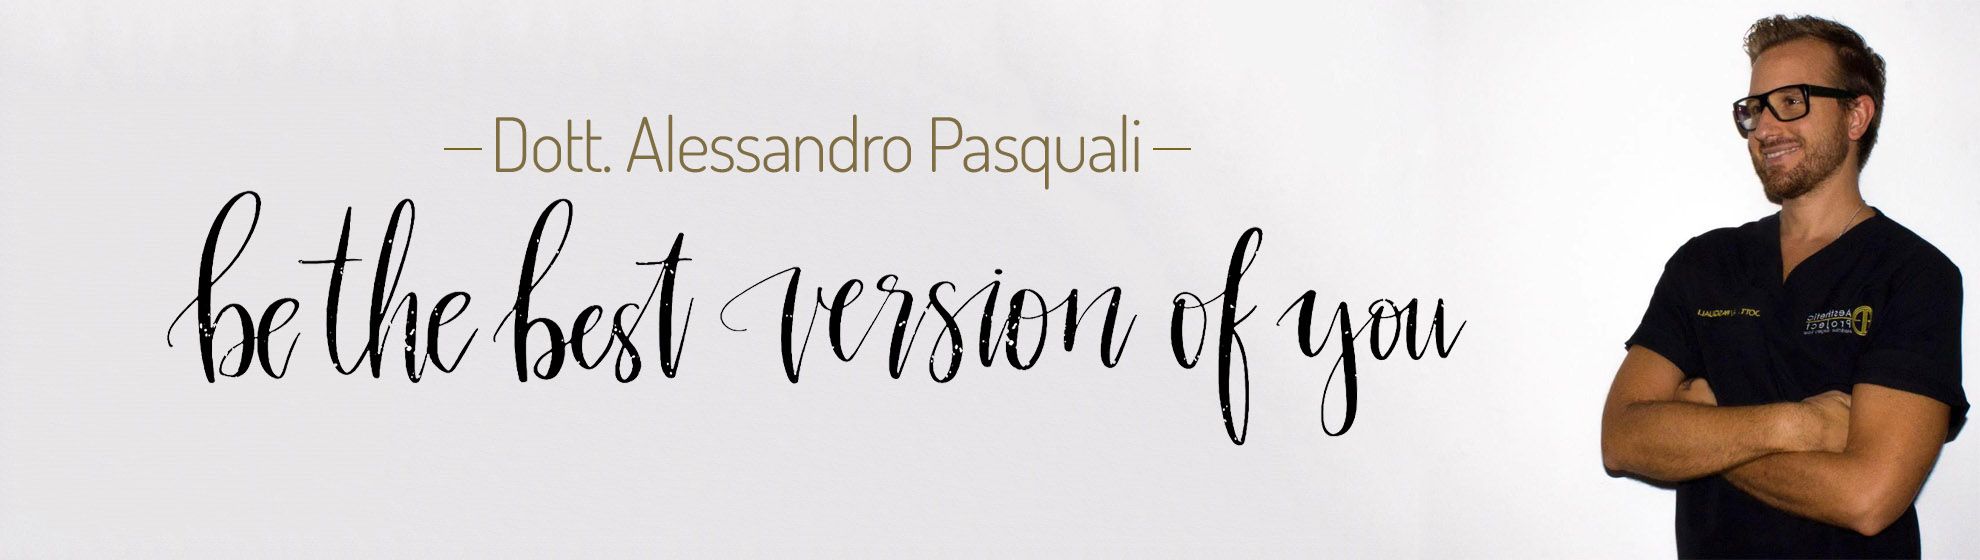 Dott. Alessandro Pasquali